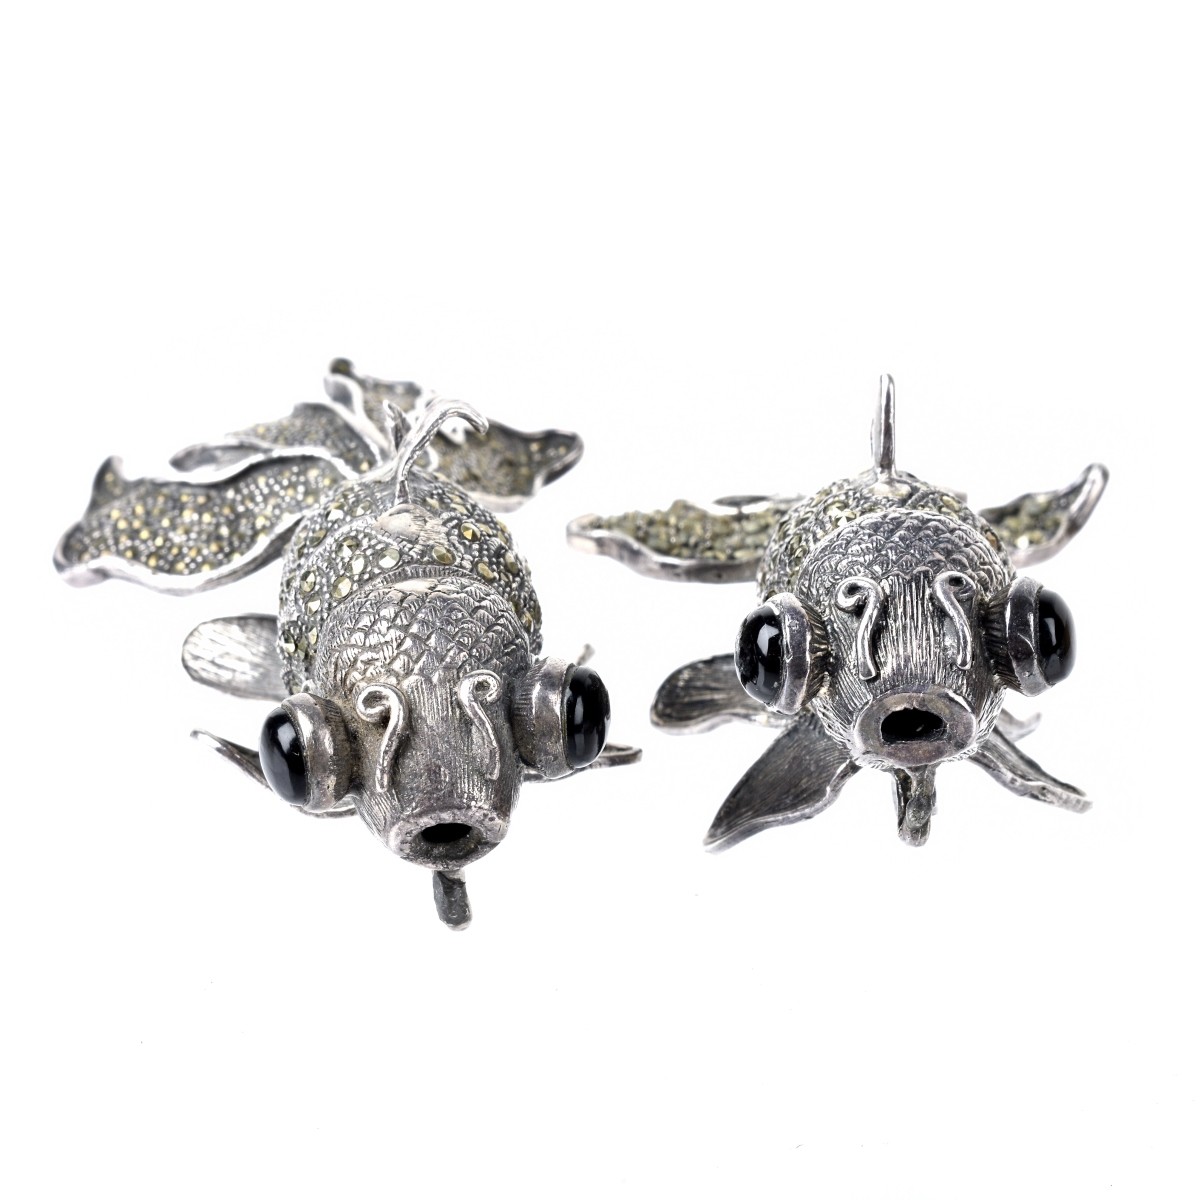 Pair of Sterling Silver Koi Fish Pin Brooches